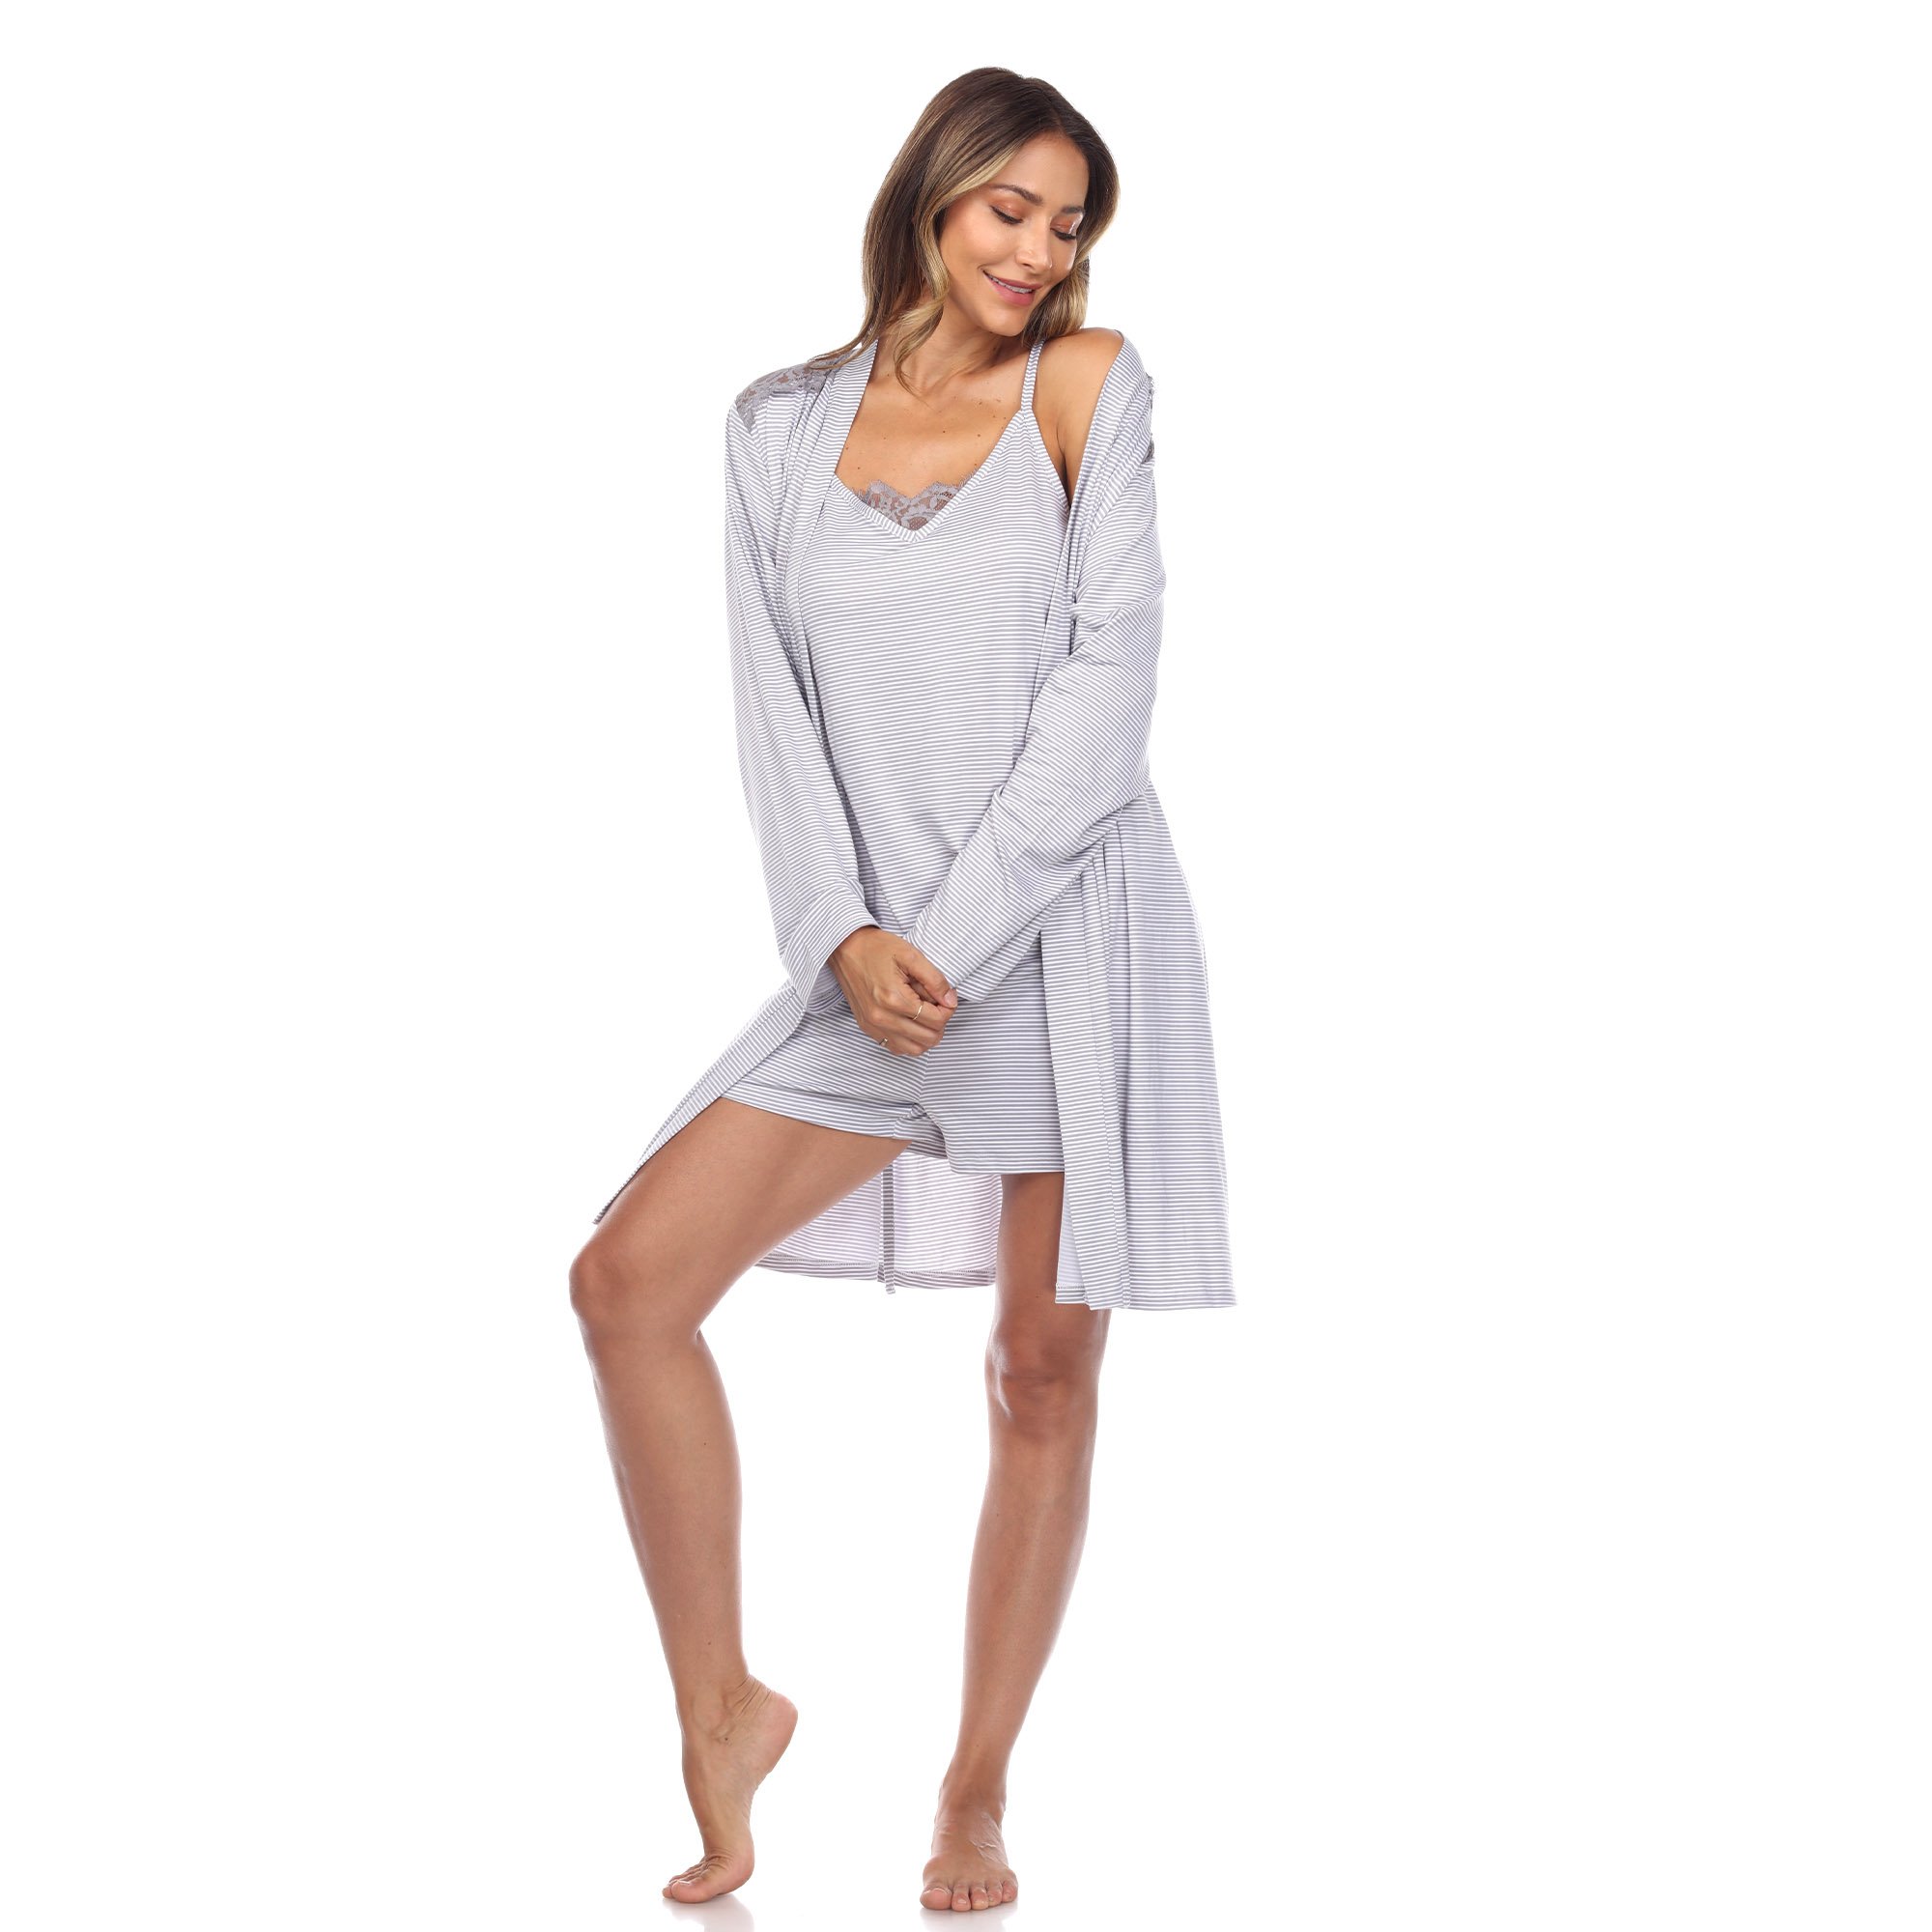 White Mark Women's 3-Piece Striped Camo Top, Shorts & Robe Matching Pajama Set - Grey, Medium